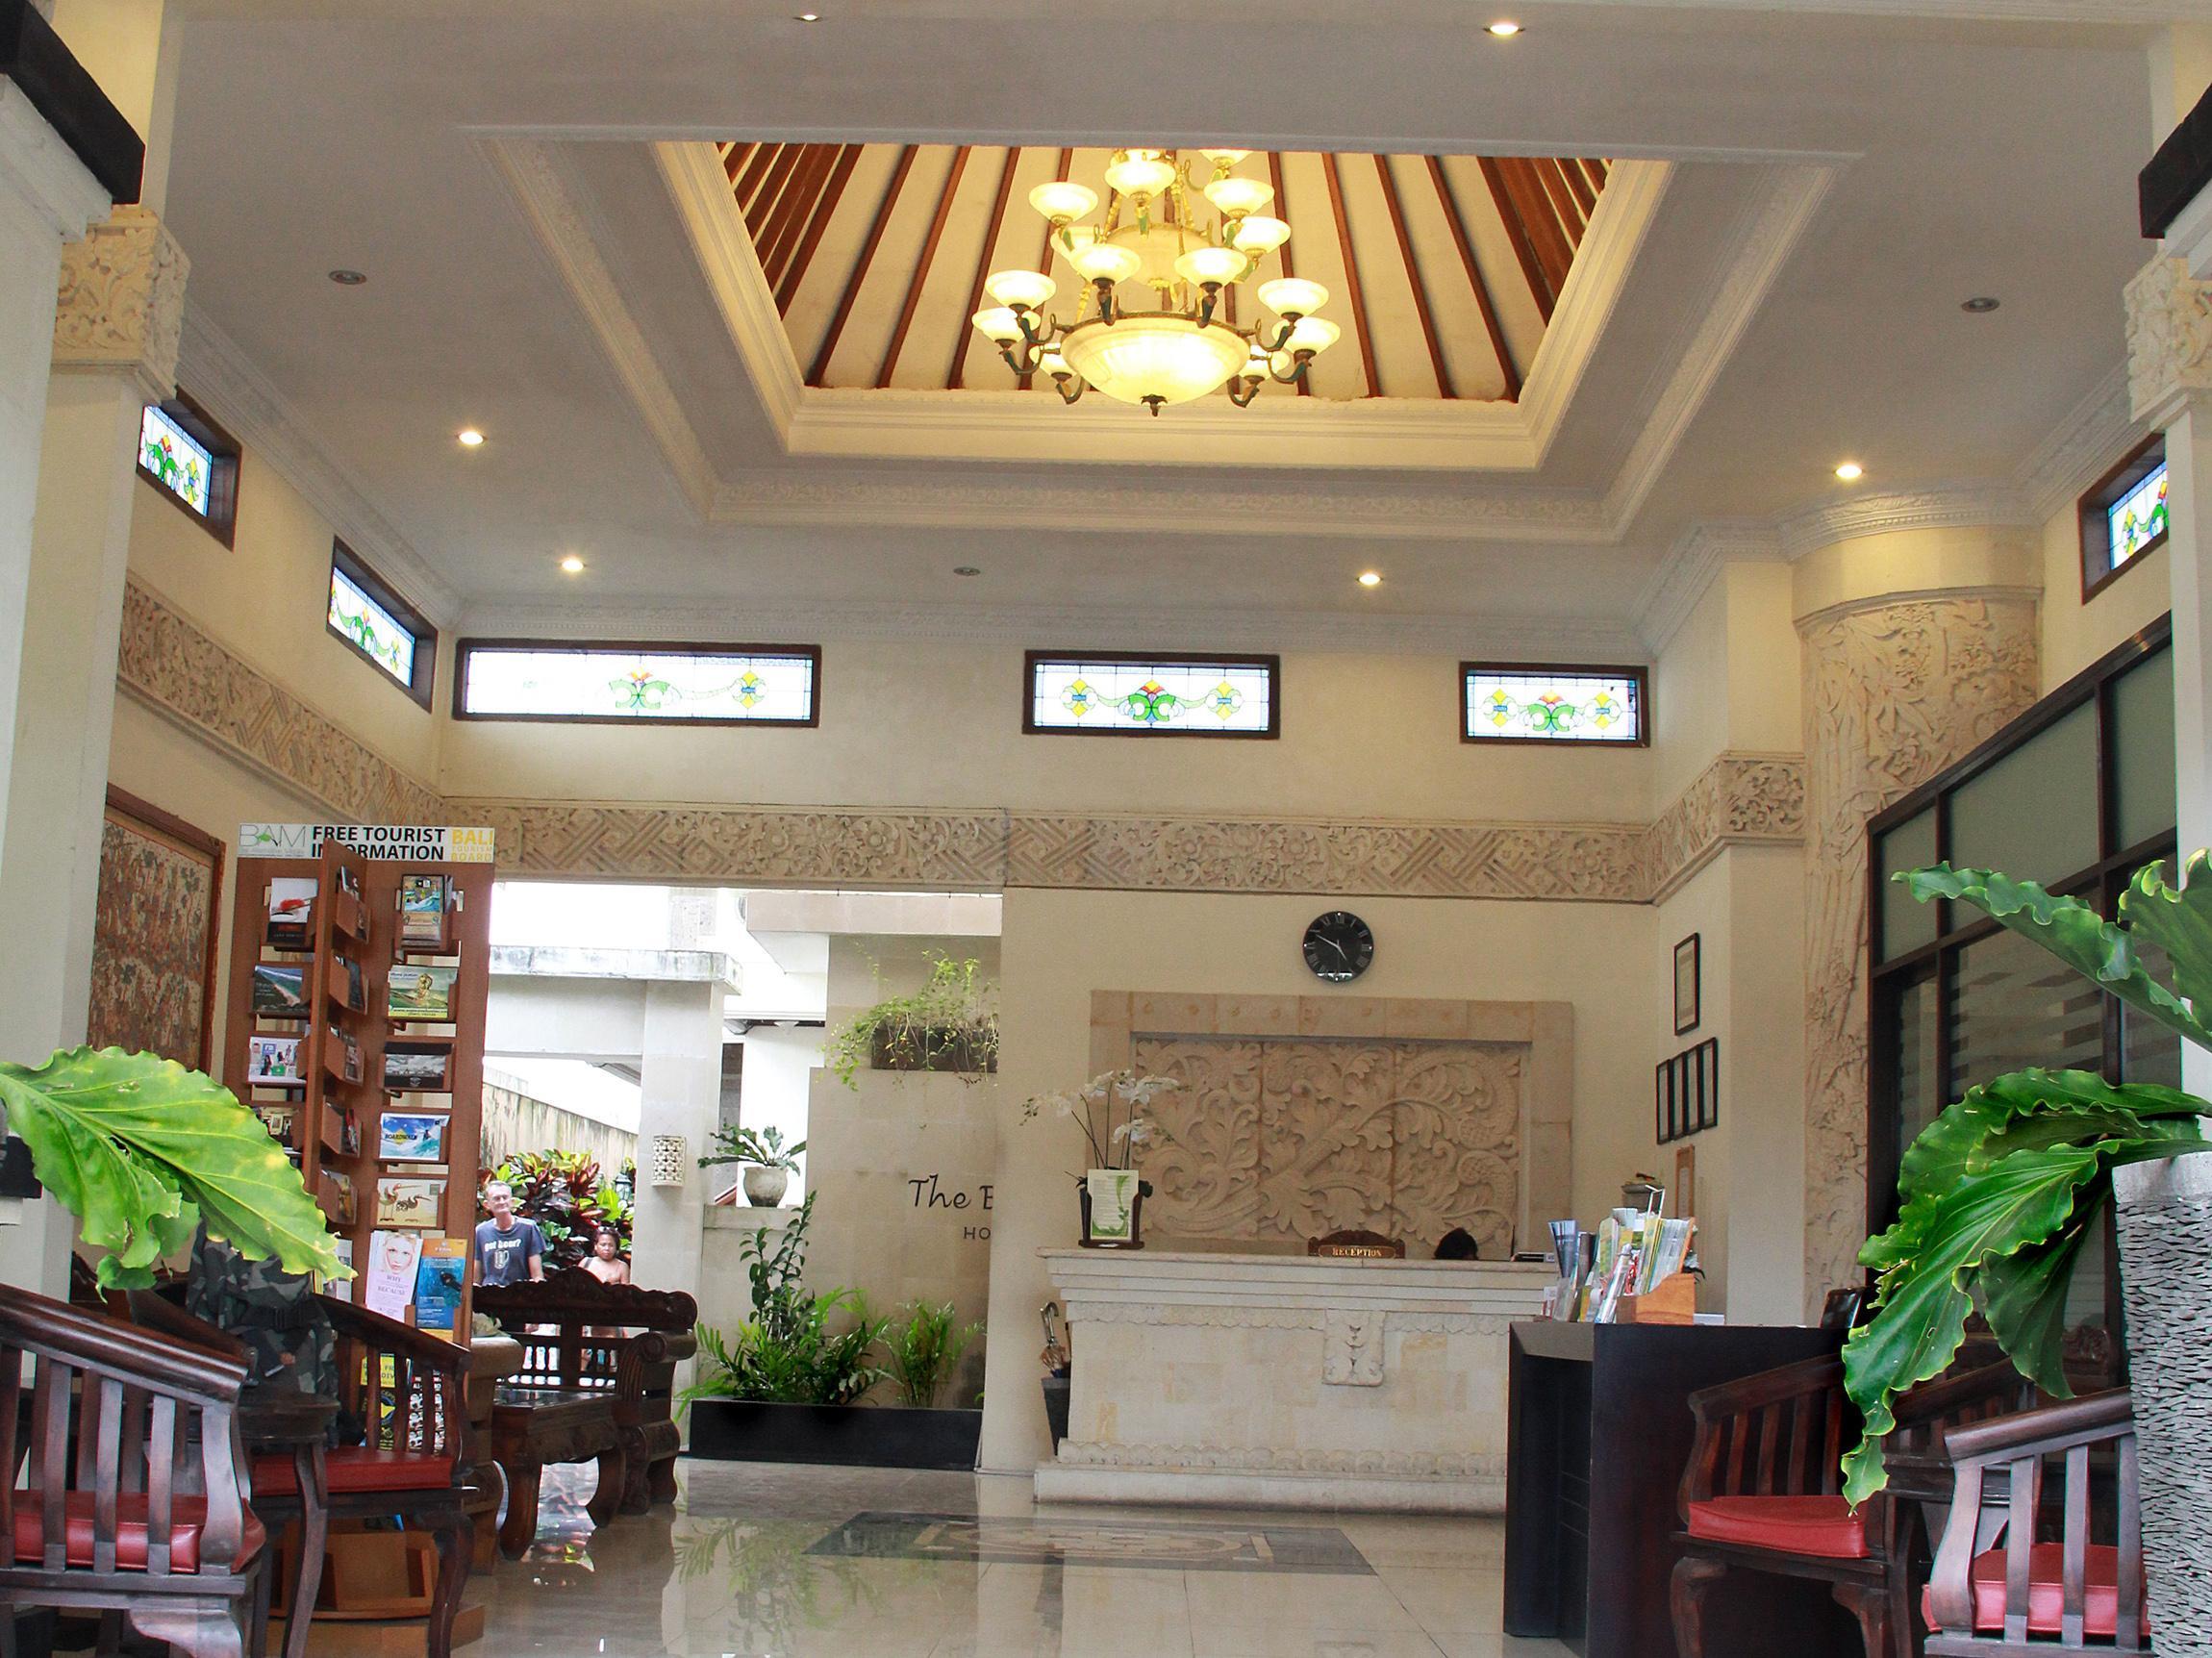 The Batu Belig Hotel & Spa